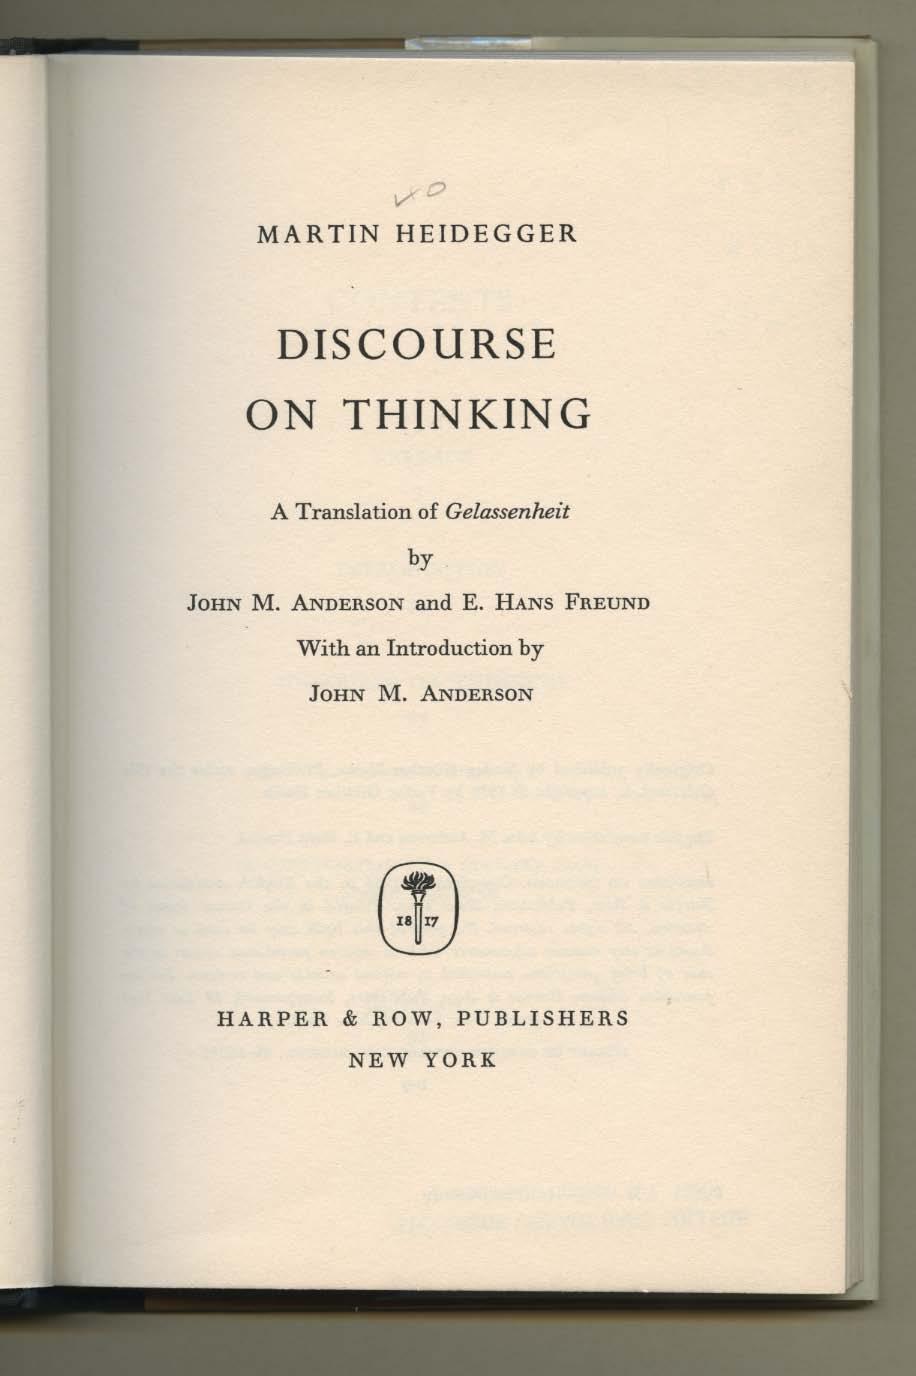 MARTIN HEIDEGGER DISCOURSE ON THINKING A Translation of Gelassenheit by JOHN M.